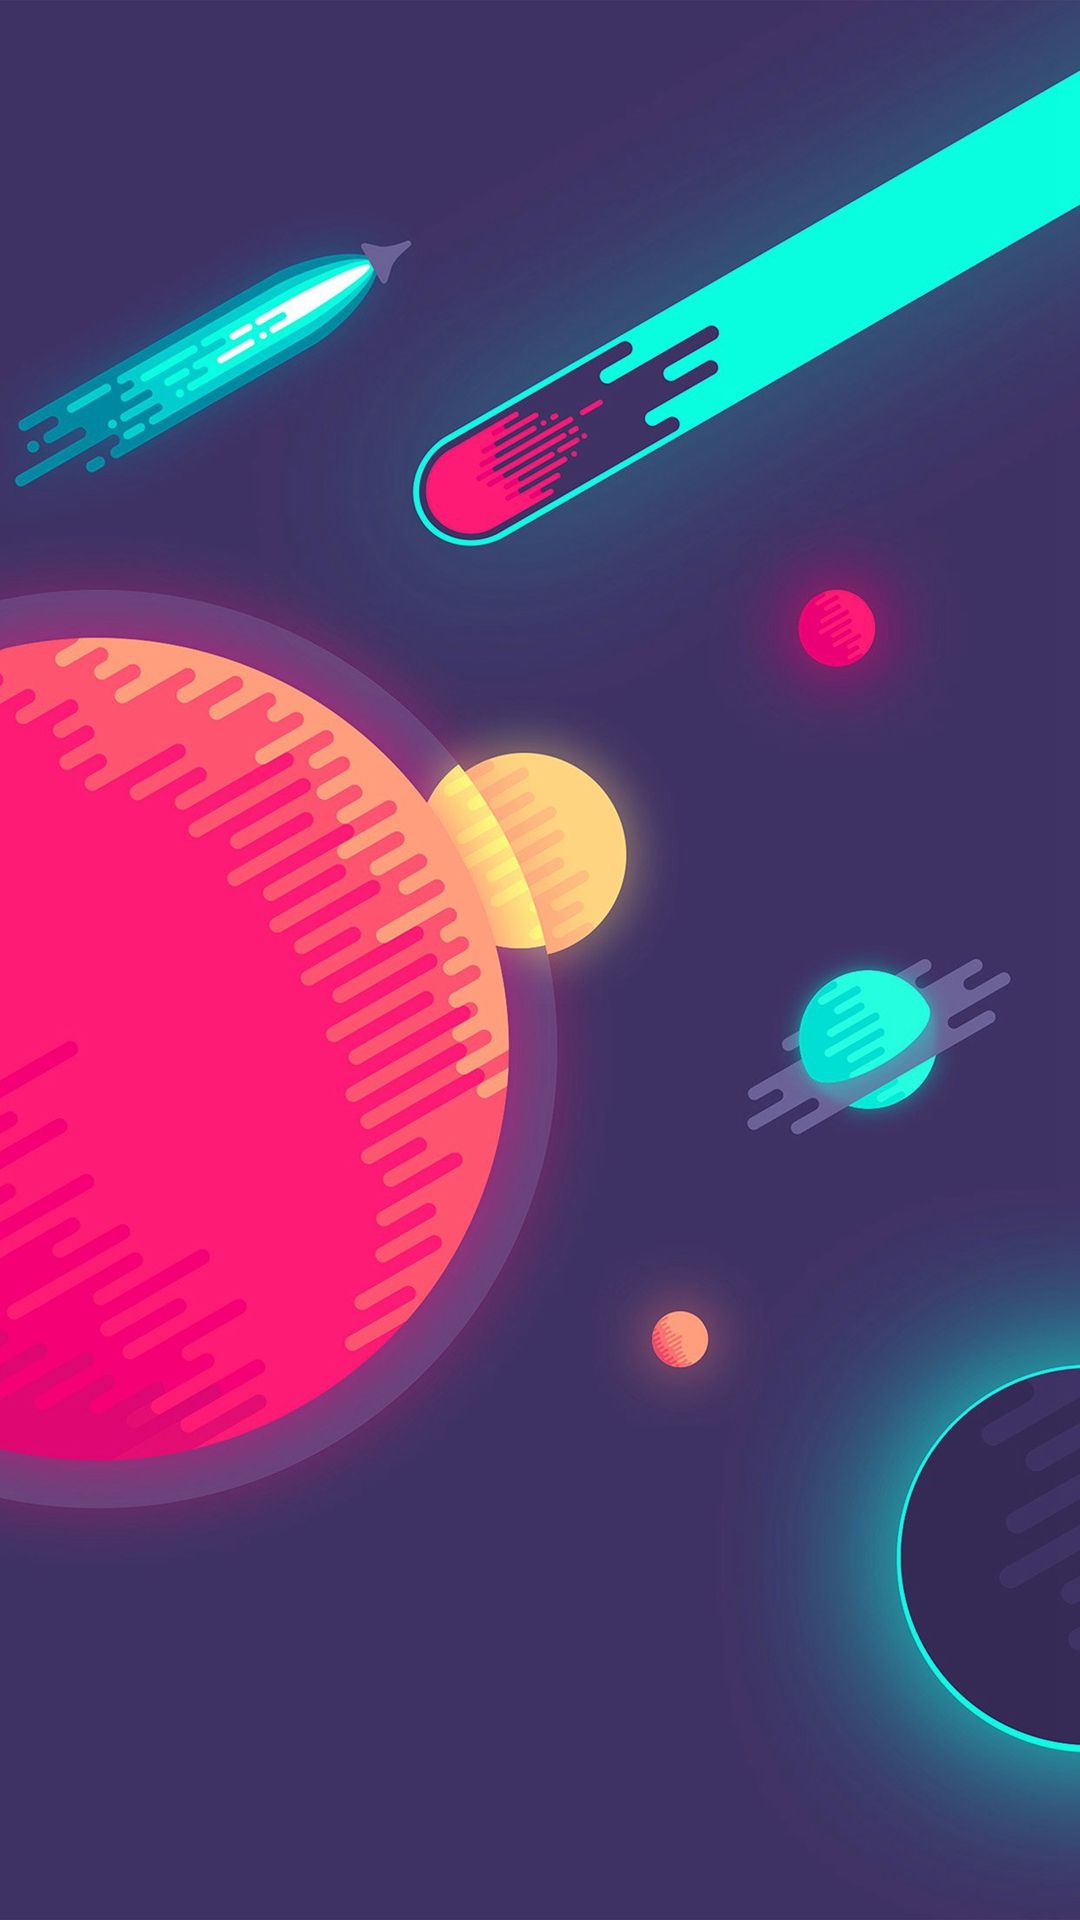 Space Minimal Art Illustration iPhone 8 Wallpaper Free Download